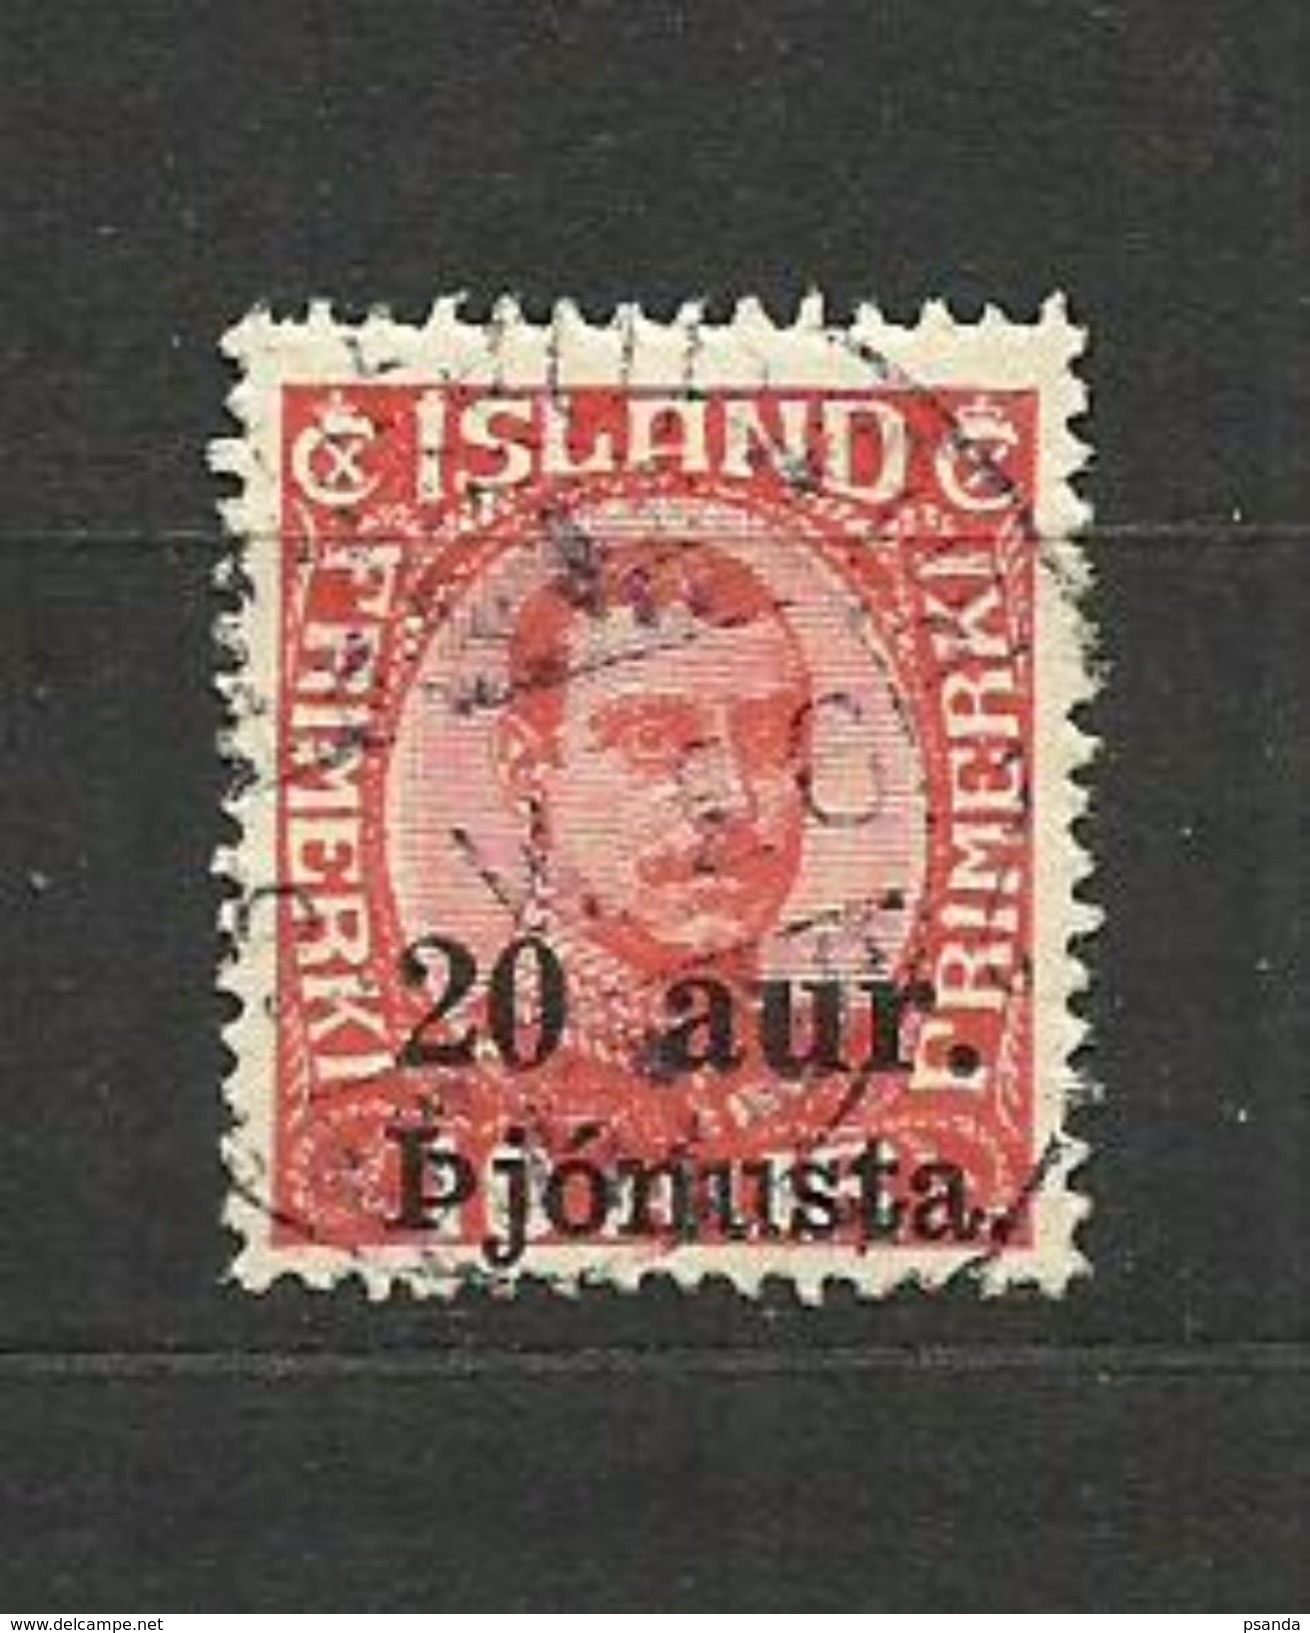 Europe > Iceland > 1923 Postage Due - Postal Stationery